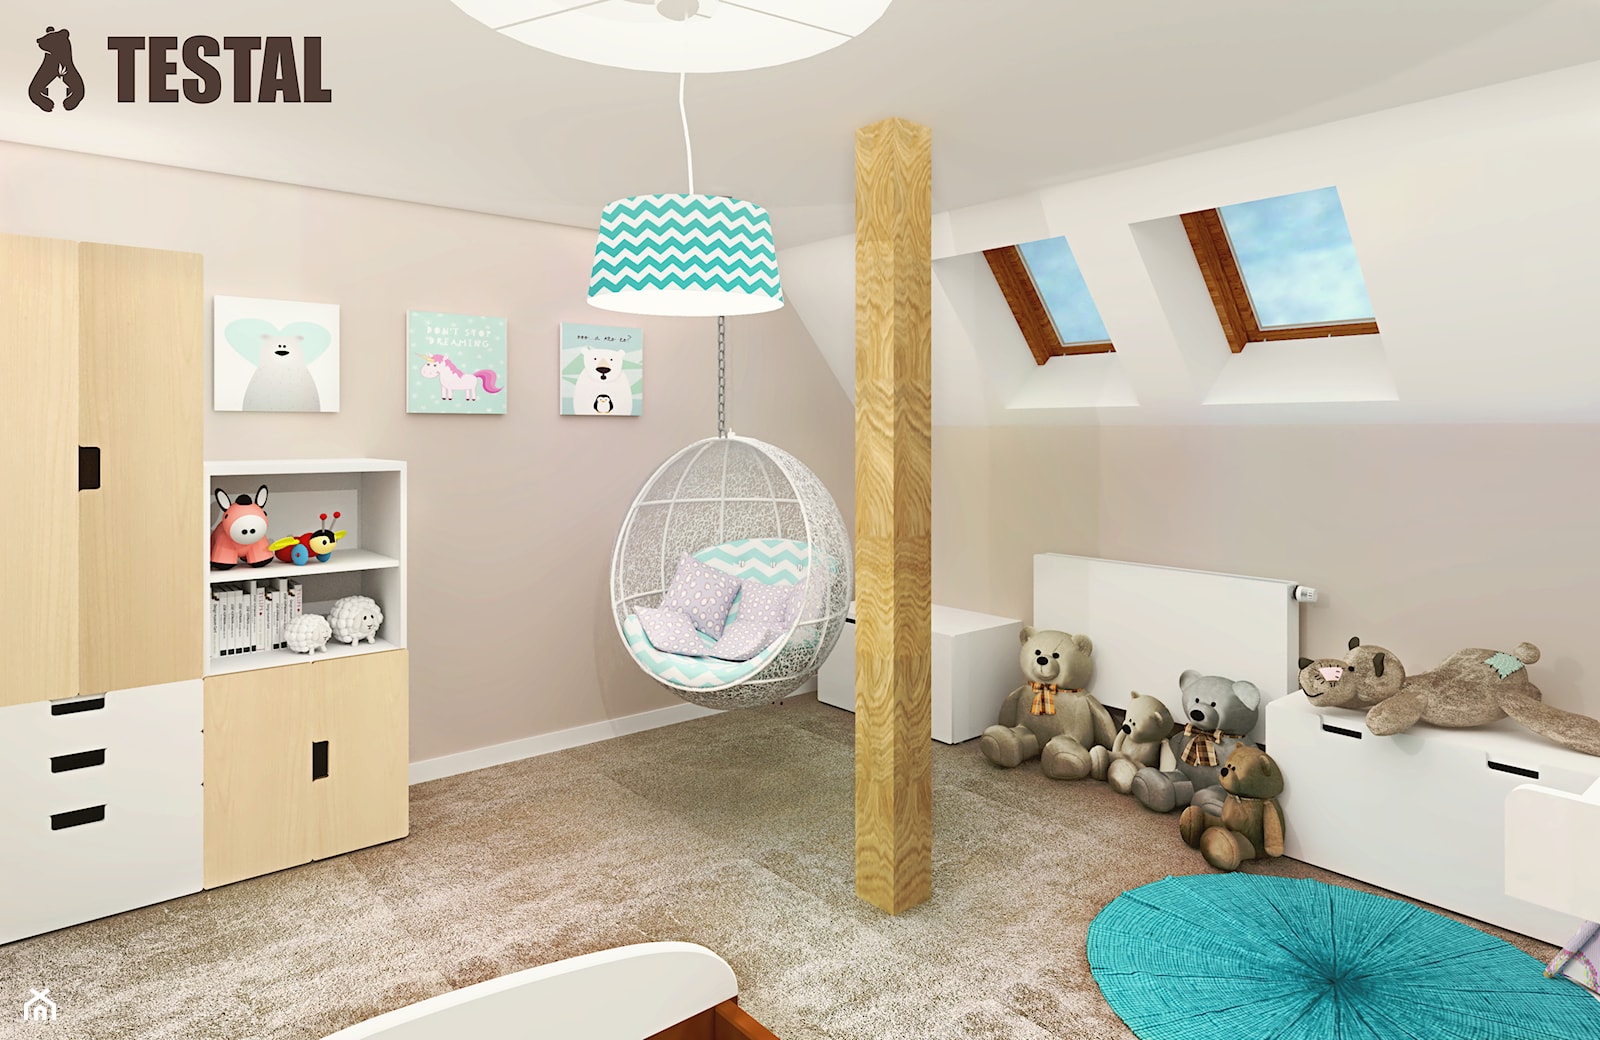 Pokój dziecka - zdjęcie od Testal - Homebook